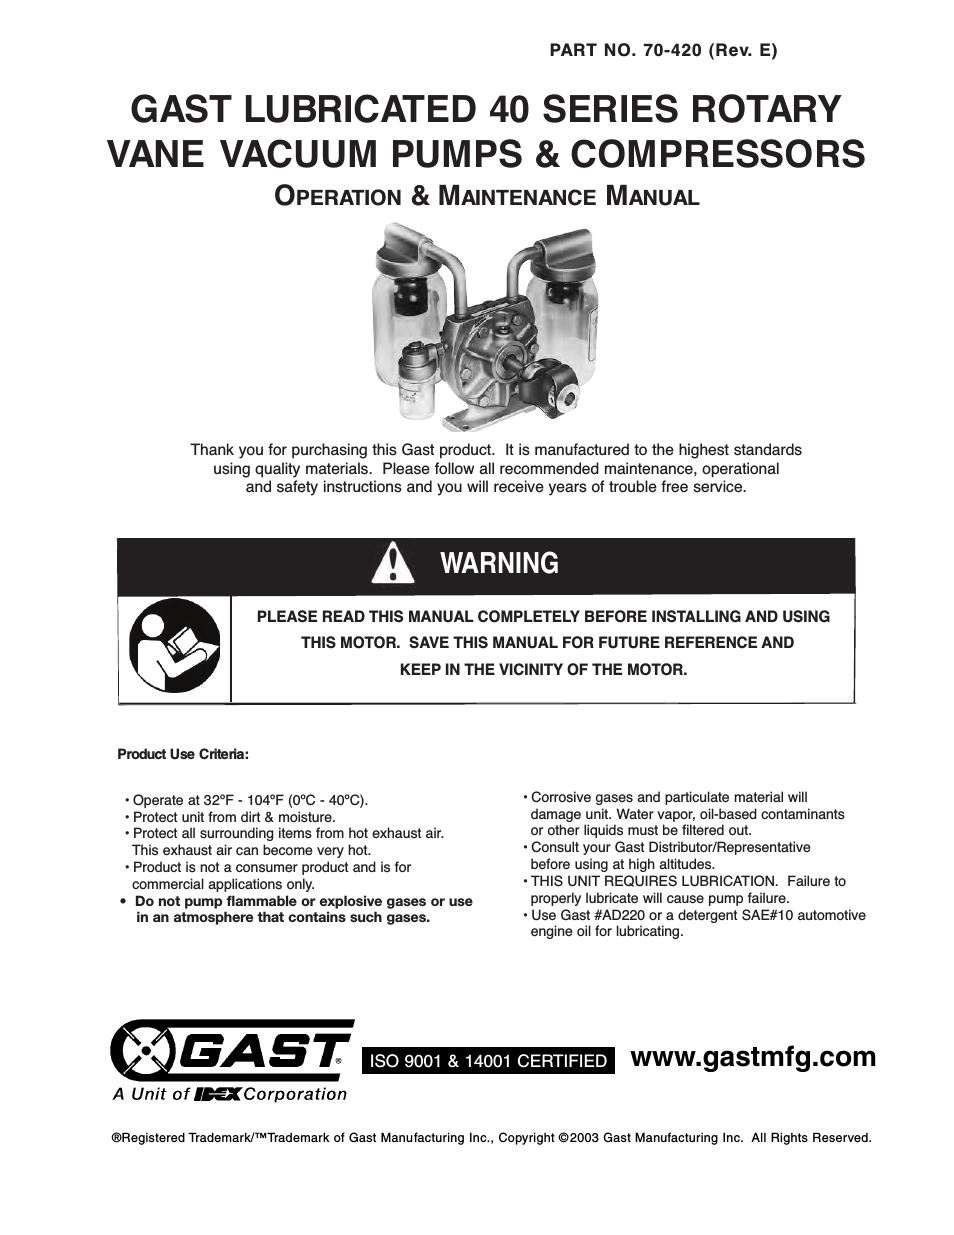 3040 Series Lubricated Vacuum Pumps and Comressors